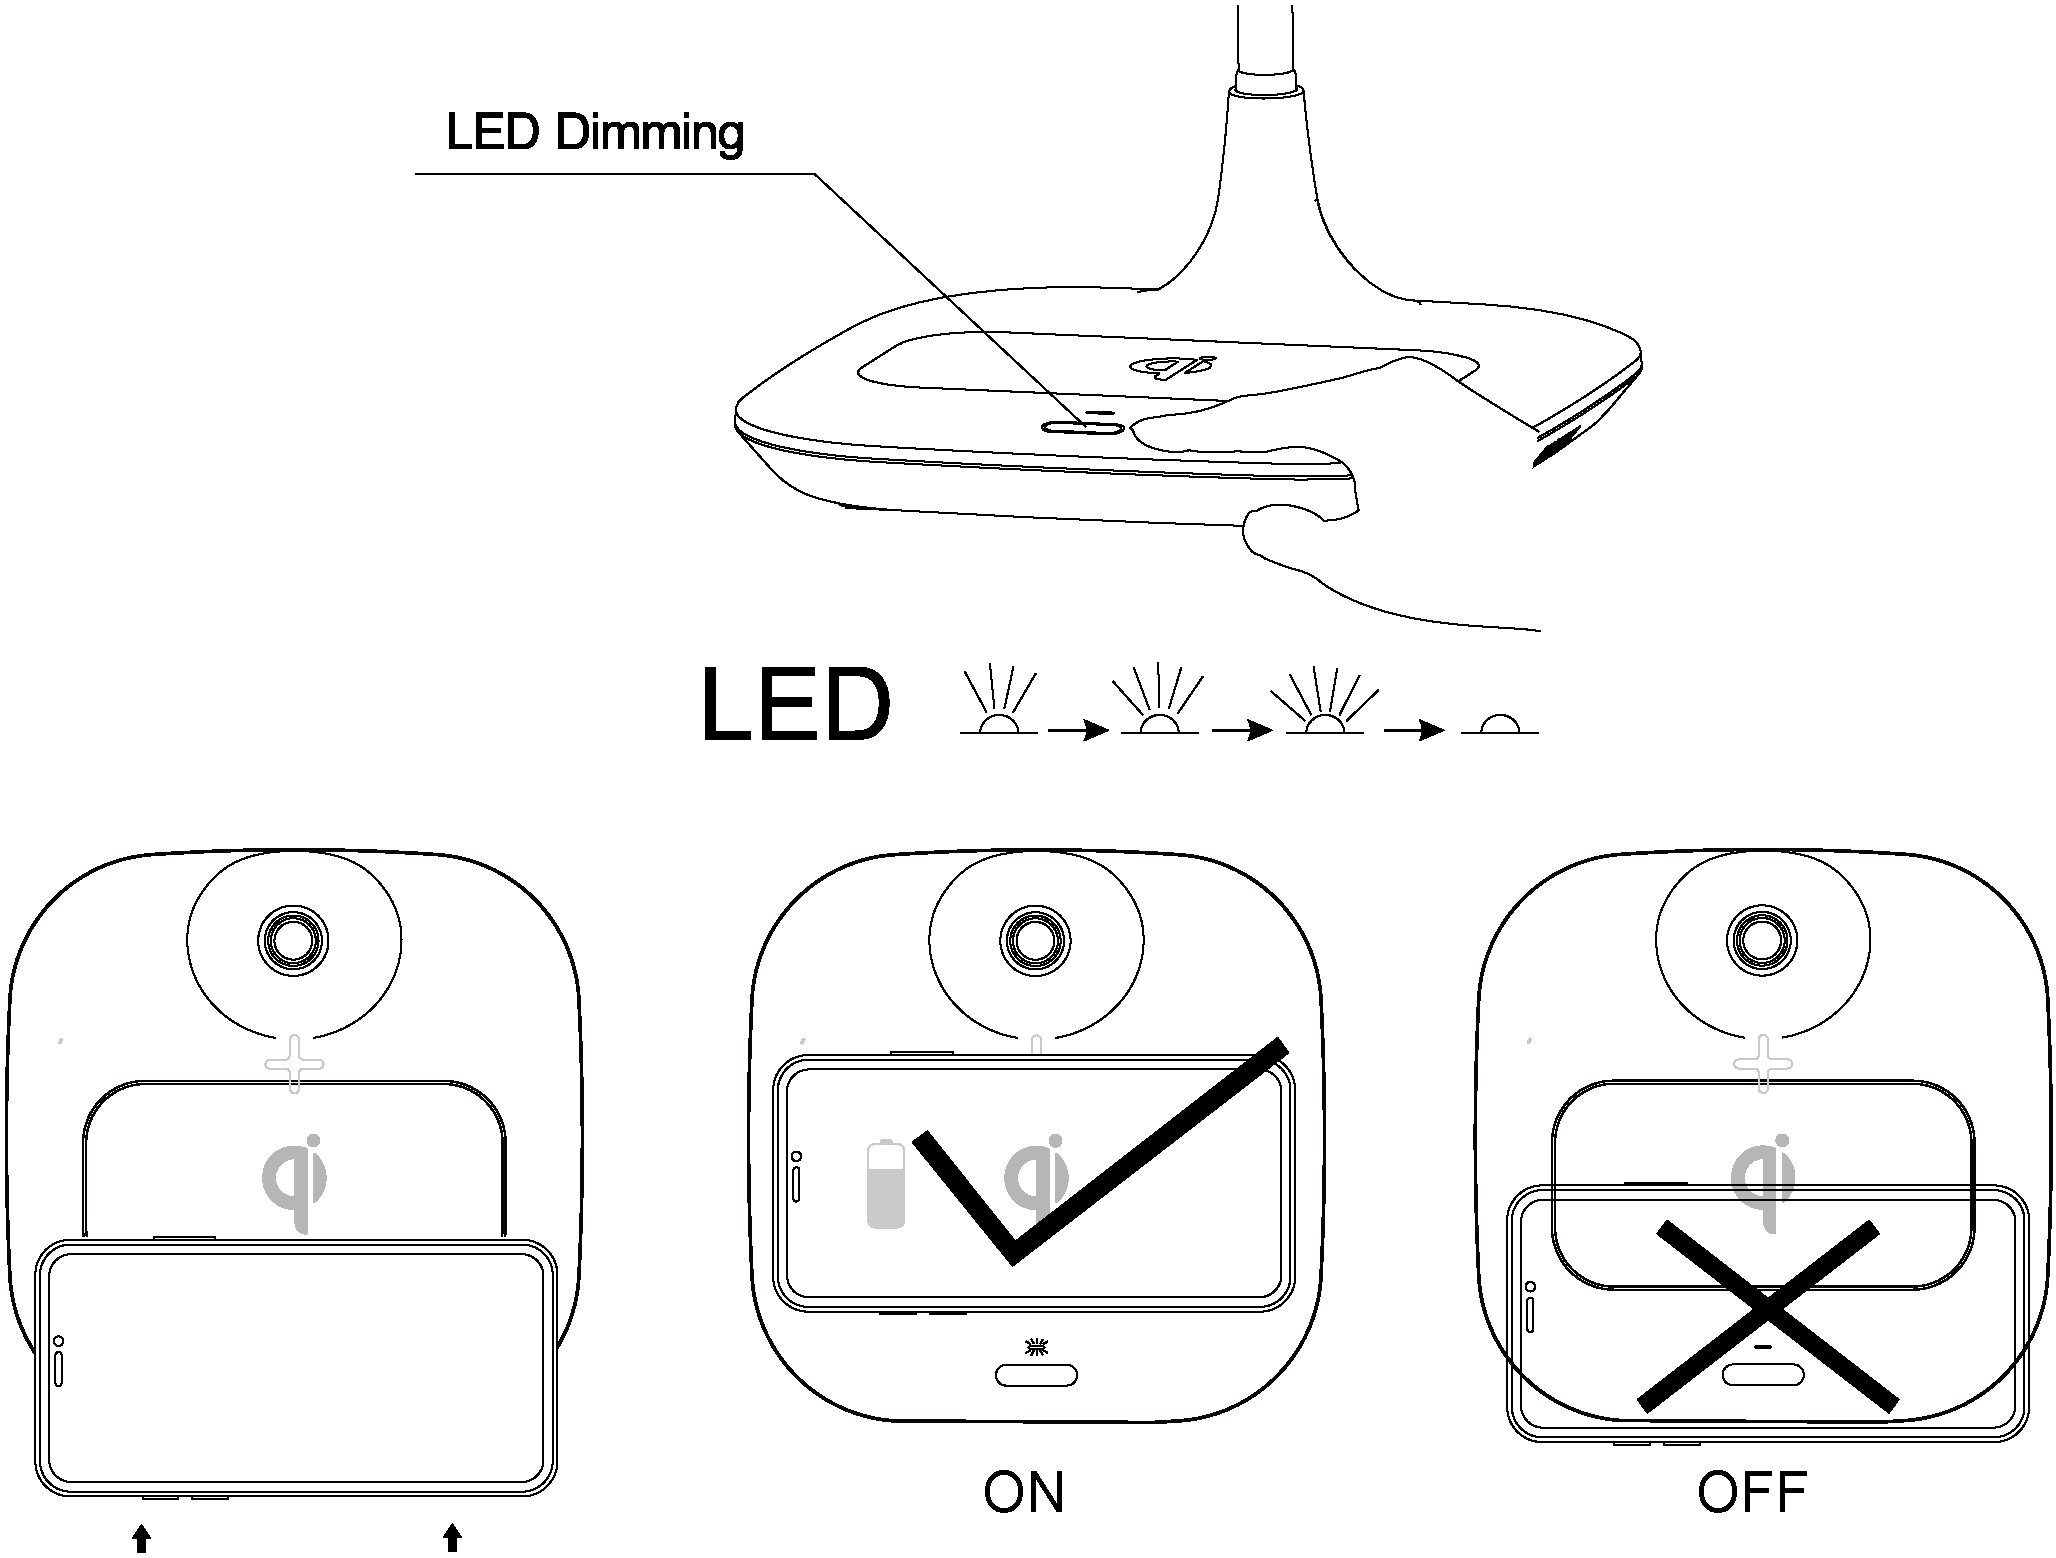 EGLO Tischleuchte MASSERIE, 3-step Neutralweiß, Dimmfunktion, dimming, QI-charger LED integriert, fest